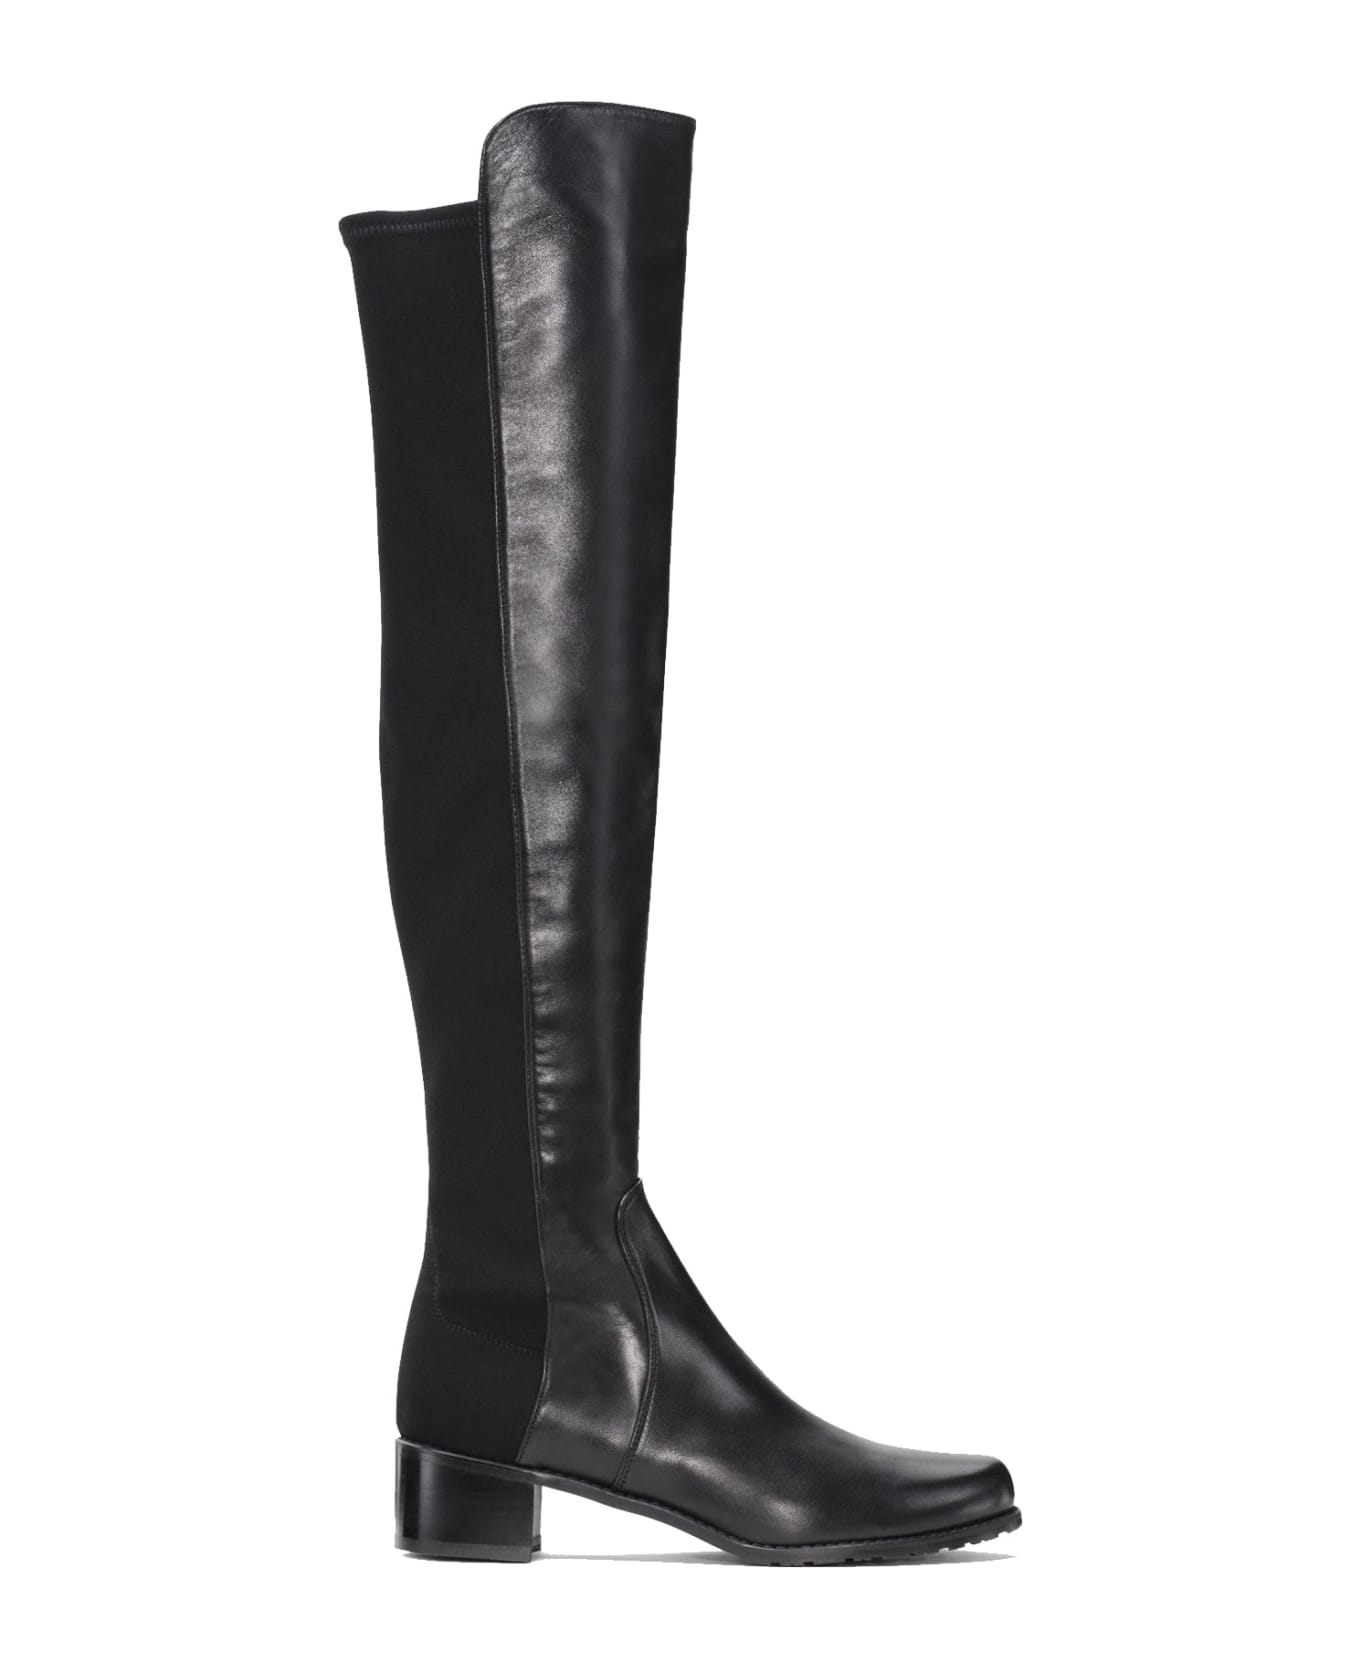 Stuart Weitzman Reserve Leather Boots - Black